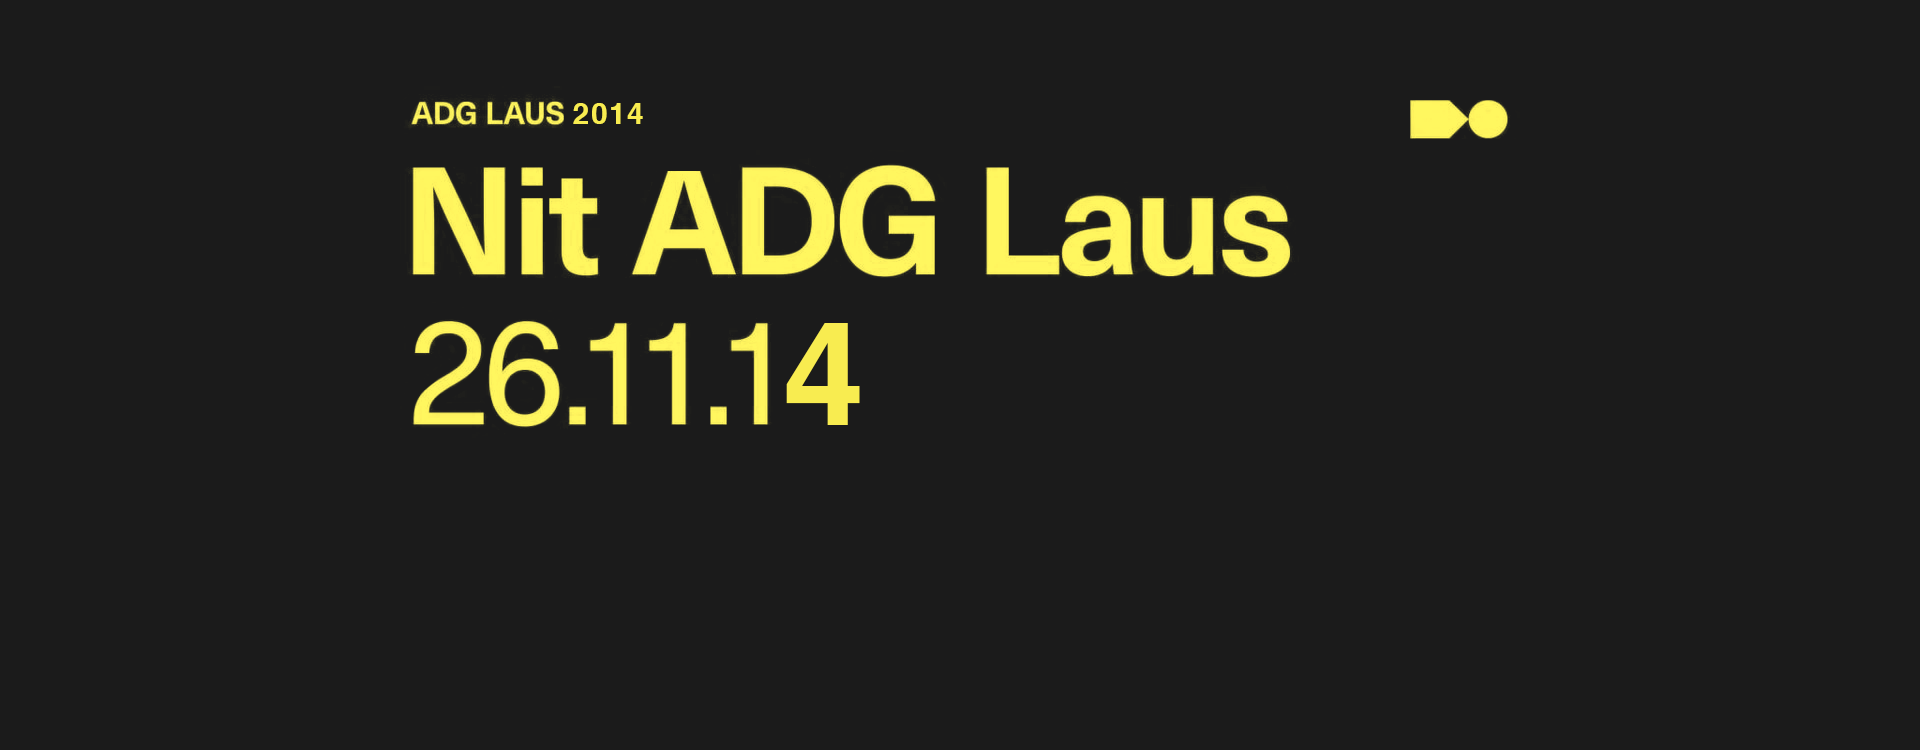 Laus | ADG-FAD – Rafa sells car